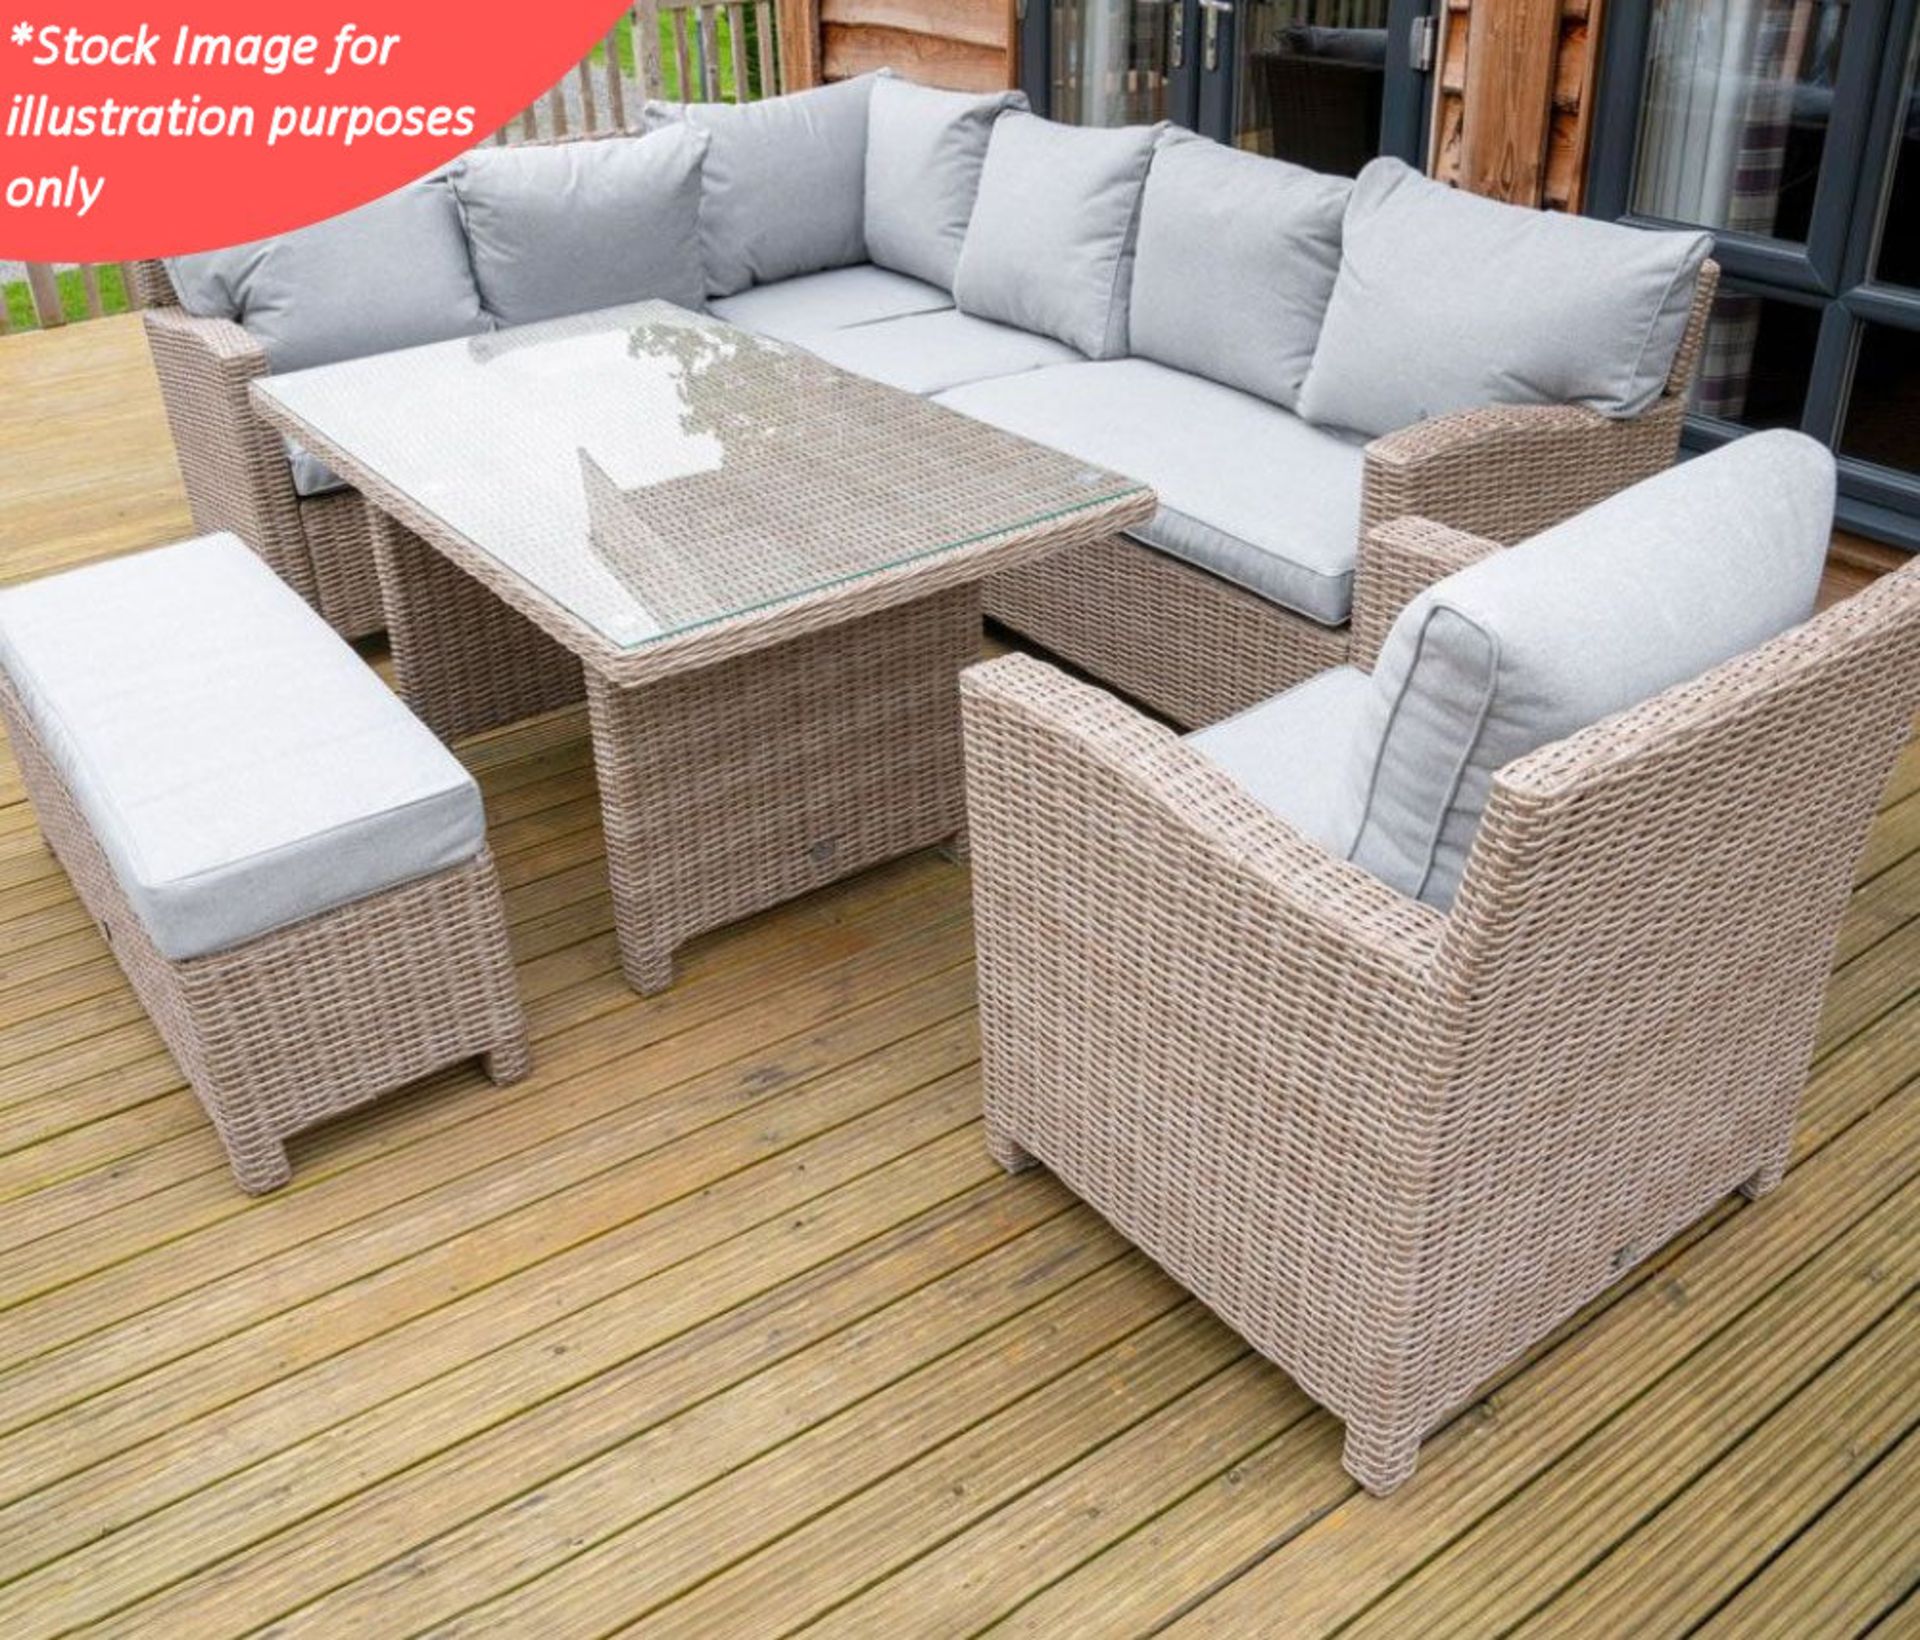 1 x LG OUTDOOR 'Britanny' Outdoor Rectangular Modular Corner Garden Furniture Set - RRP £1,999